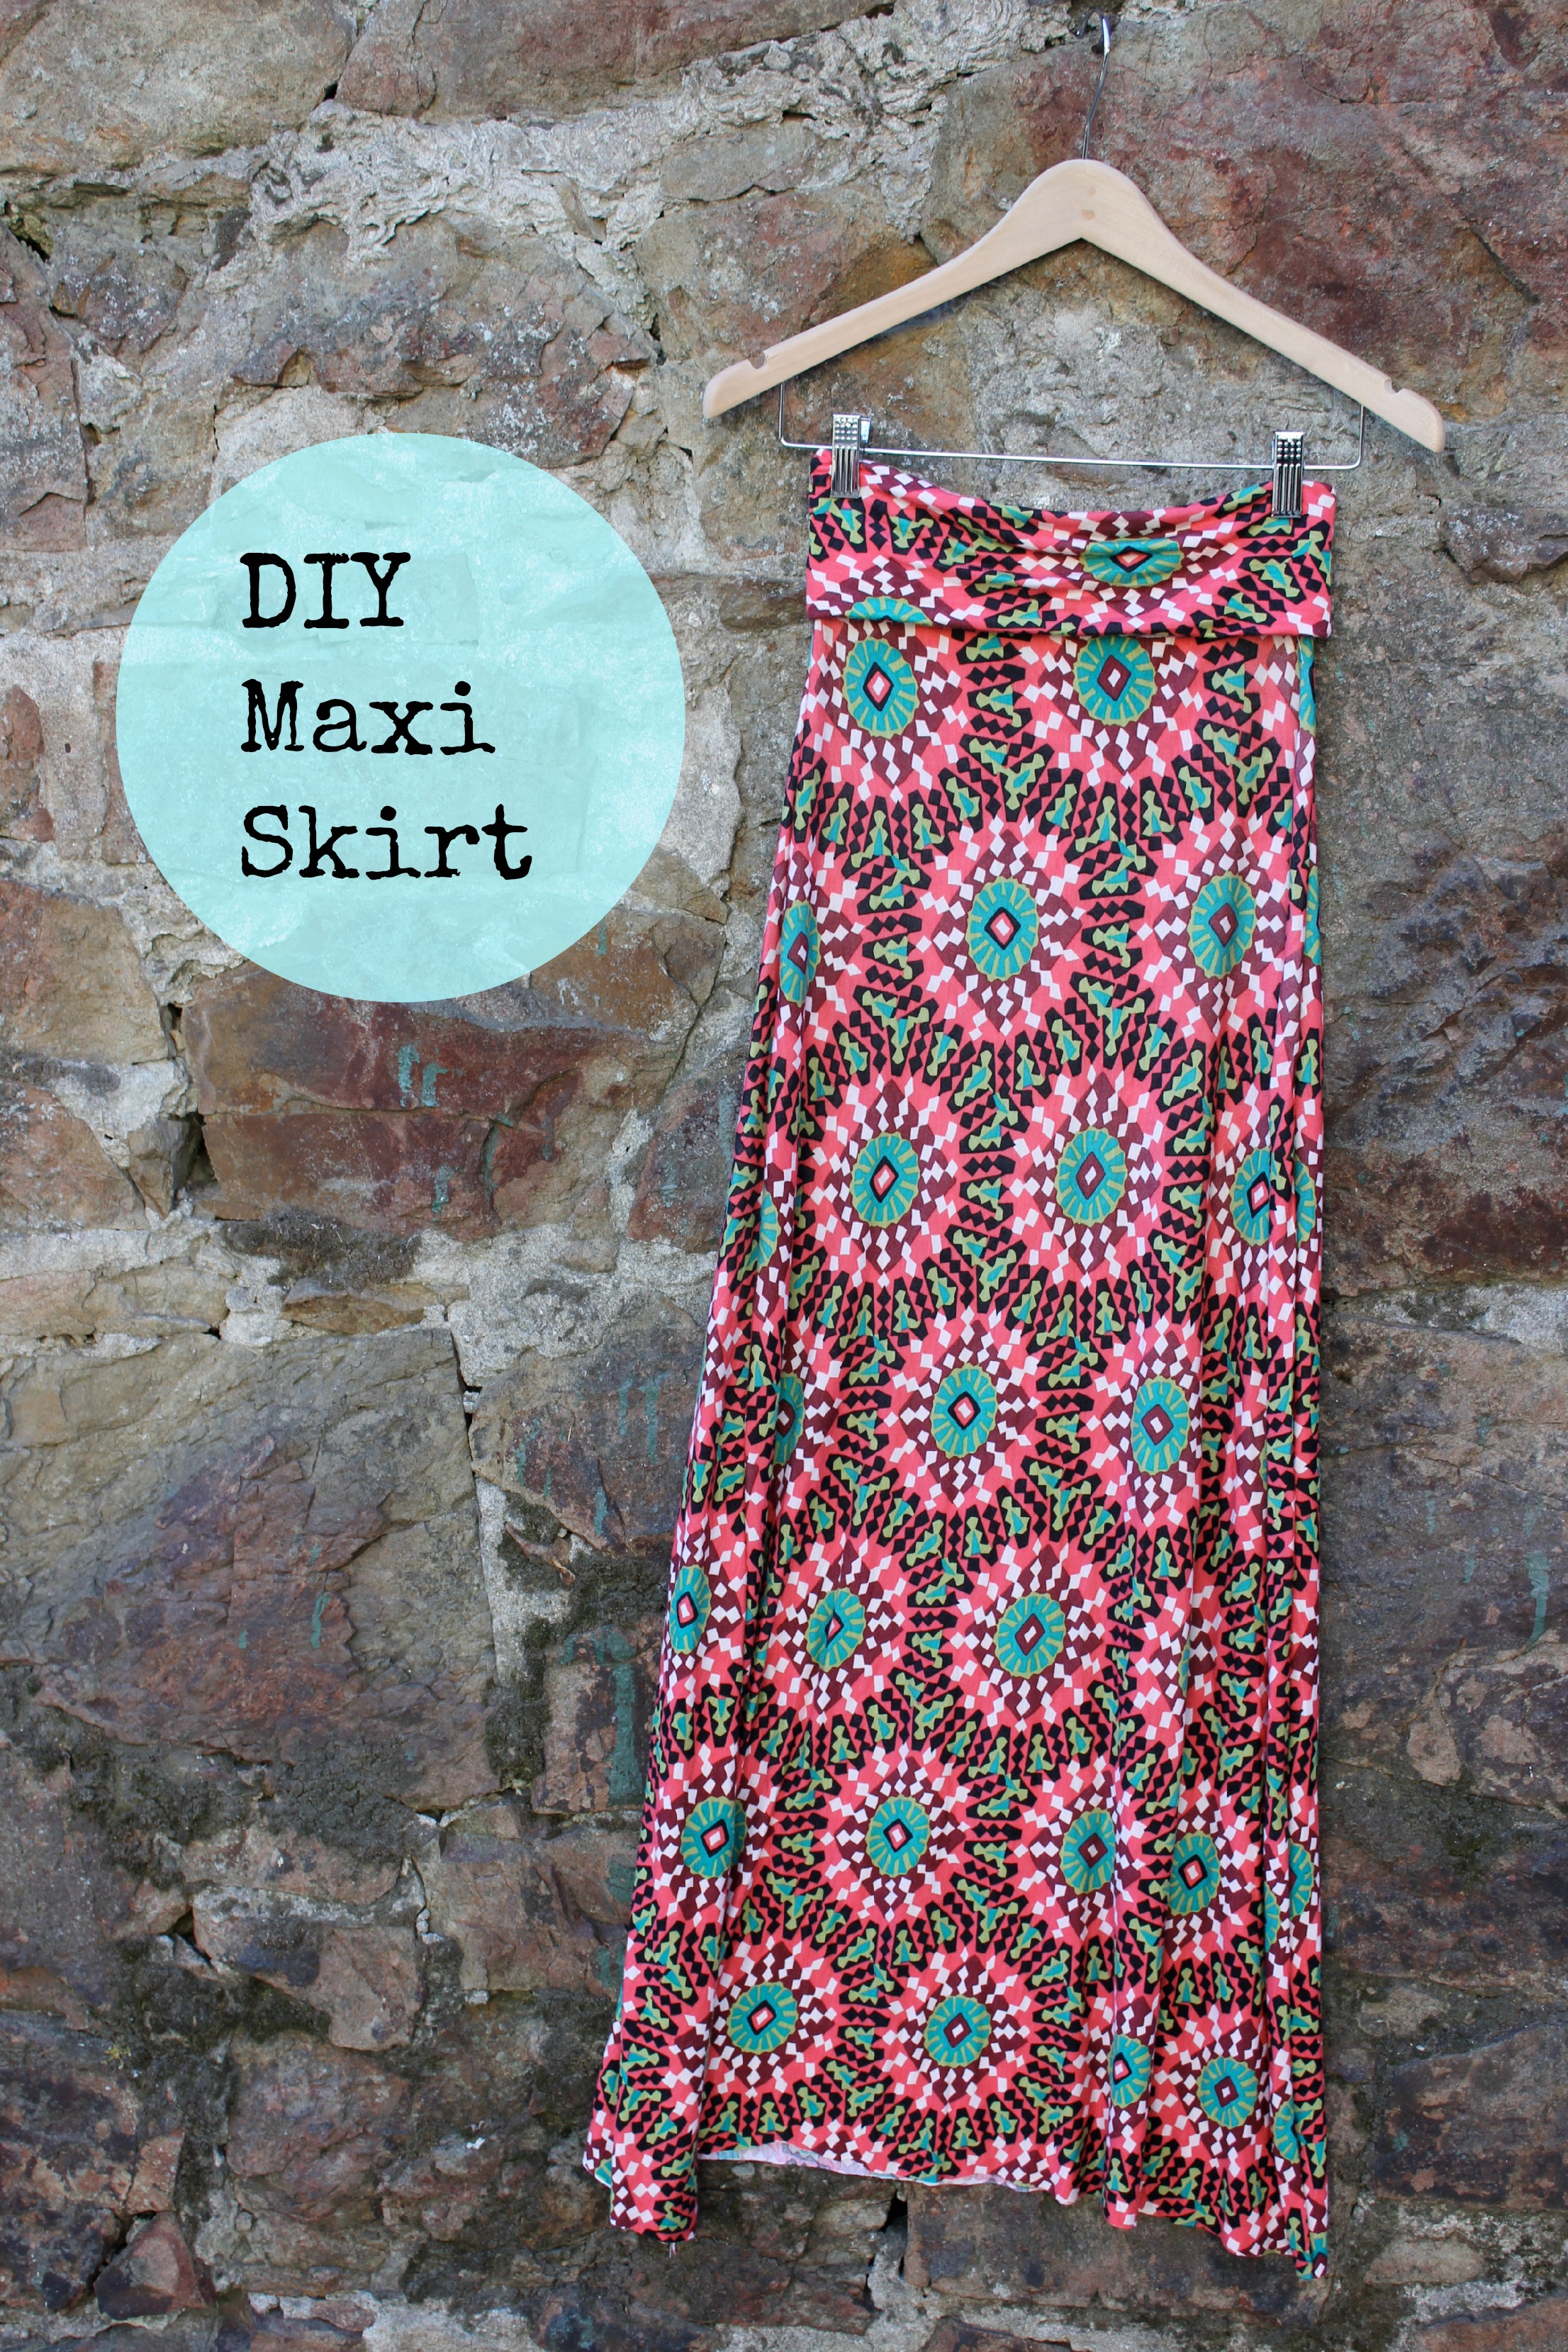 DIY – Maxi Skirt tutorial